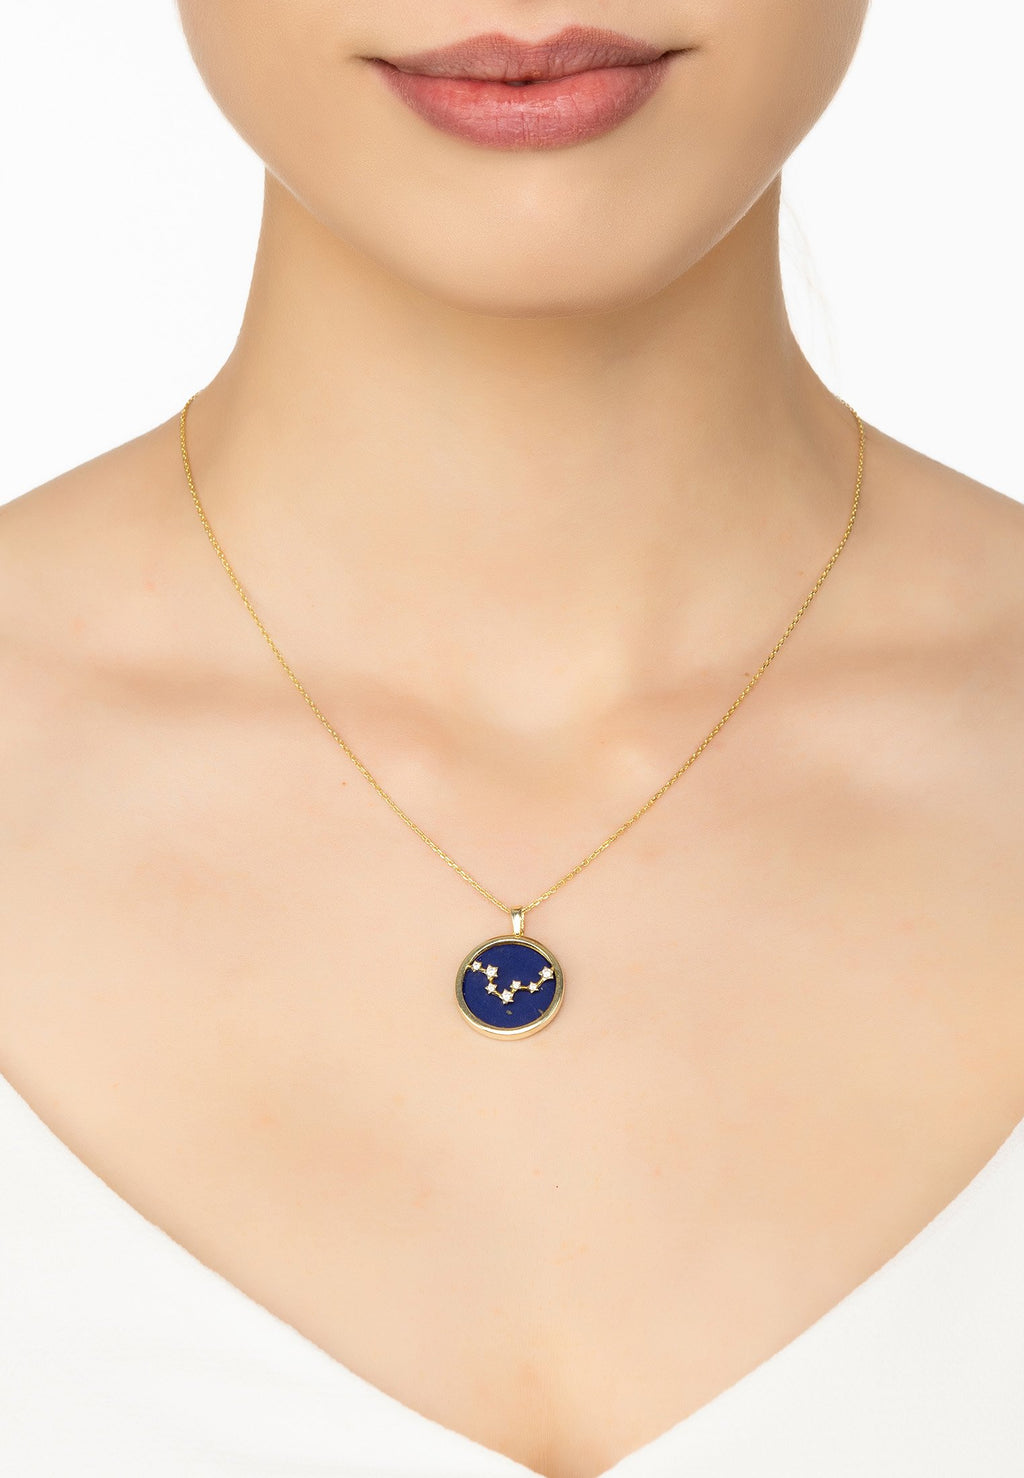 Zodiac Lapis Lazuli Gemstone Star Constellation Pendant Necklace Gold Pisces